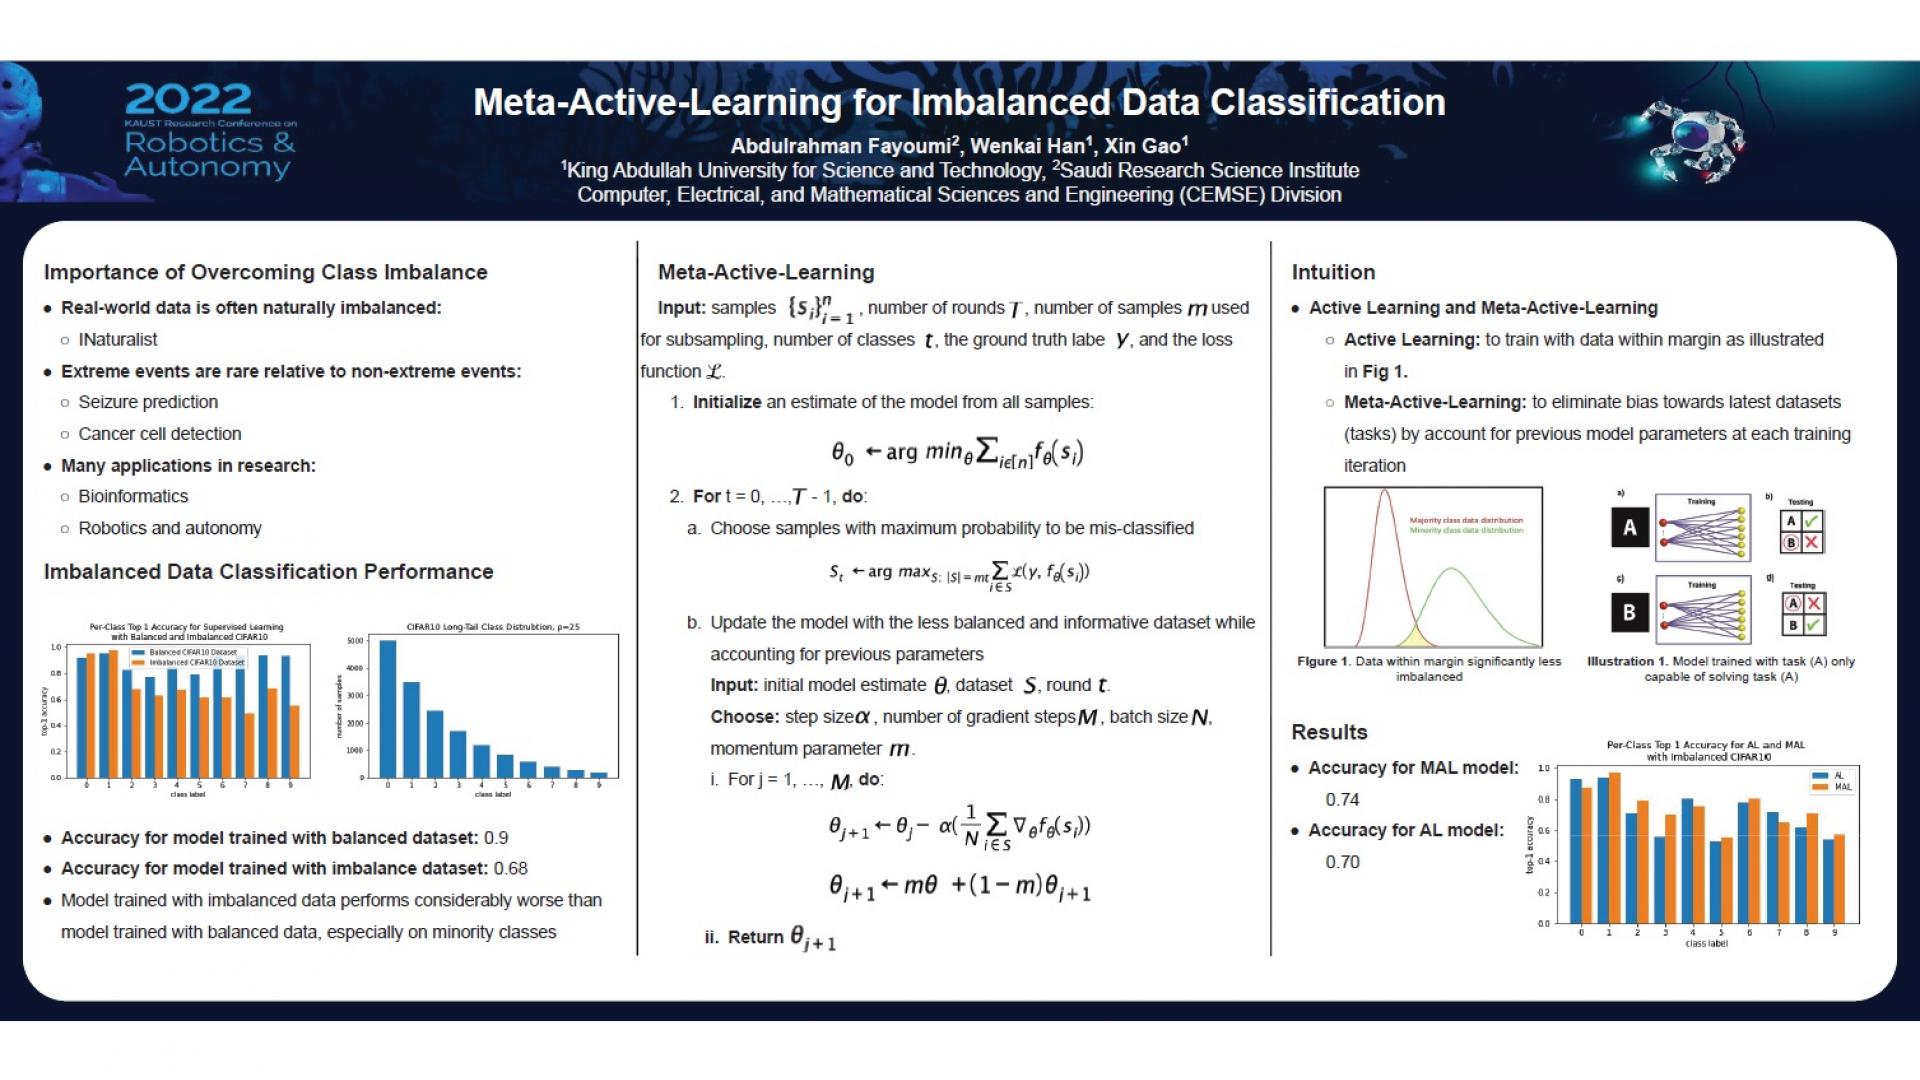 Abdulrahman Fayoumi_Meta-Active-Learning for Imbalanced Data Classification